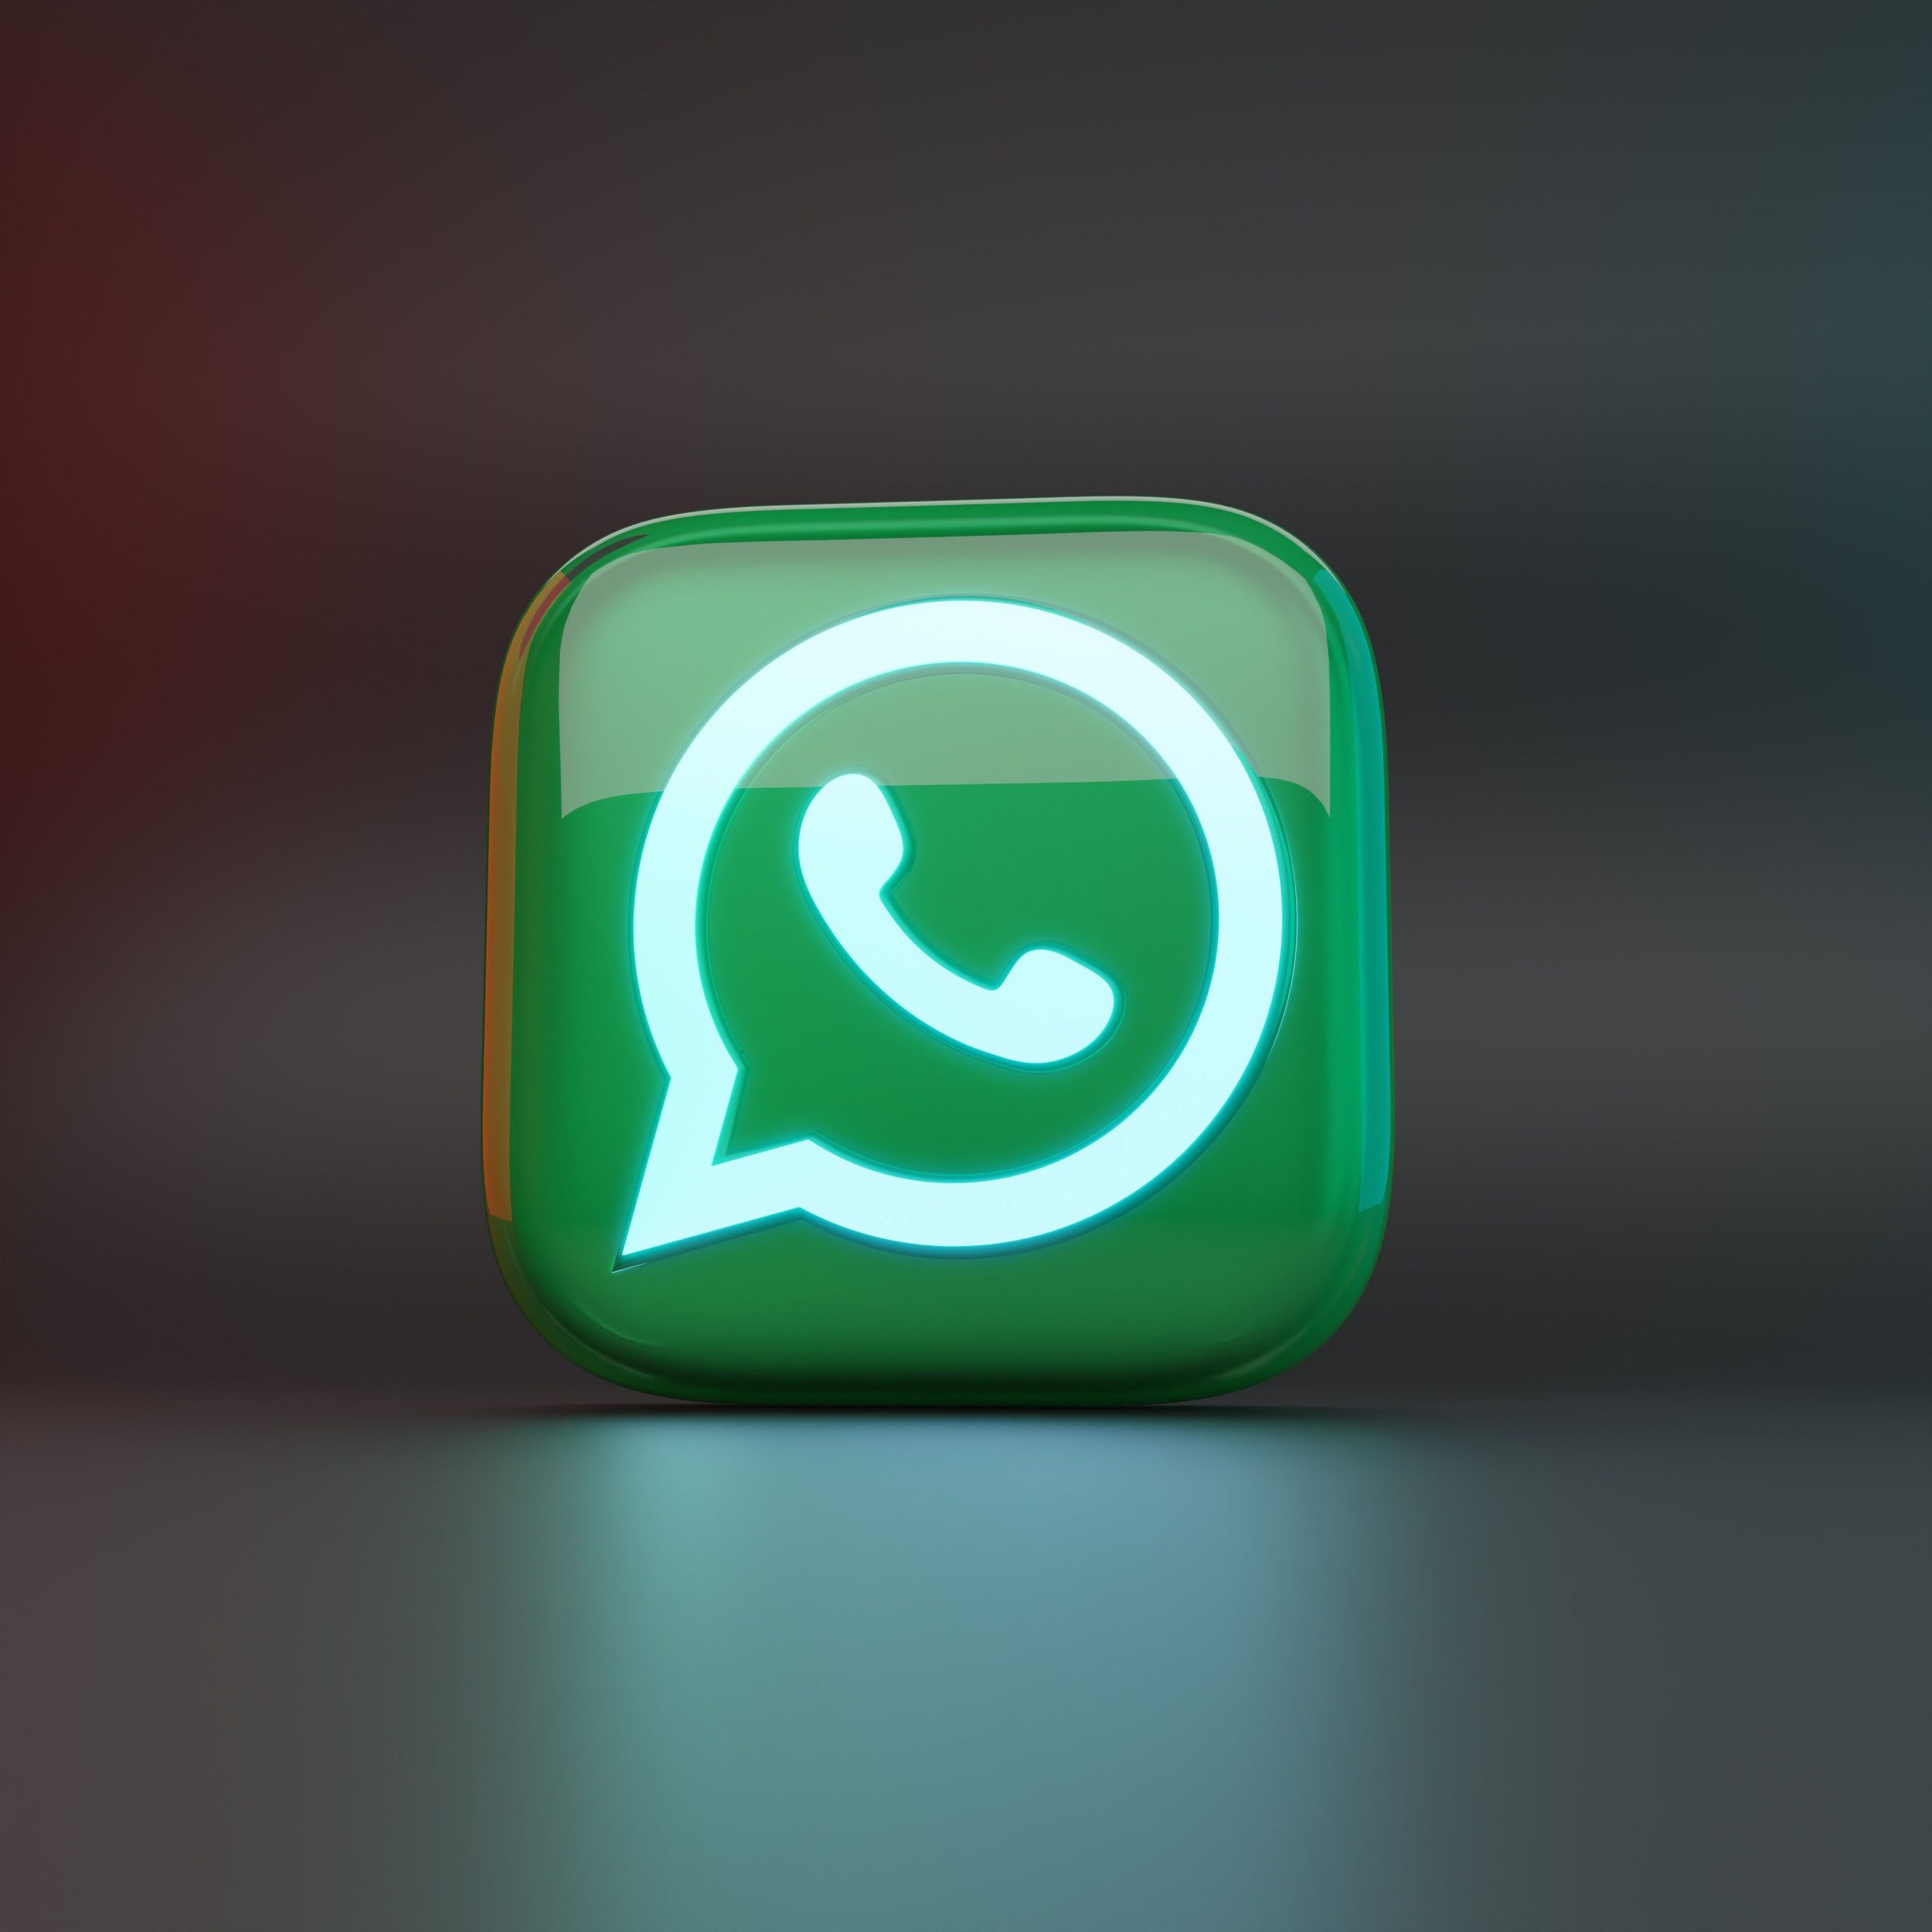 Whatsapp announces new Communities feature